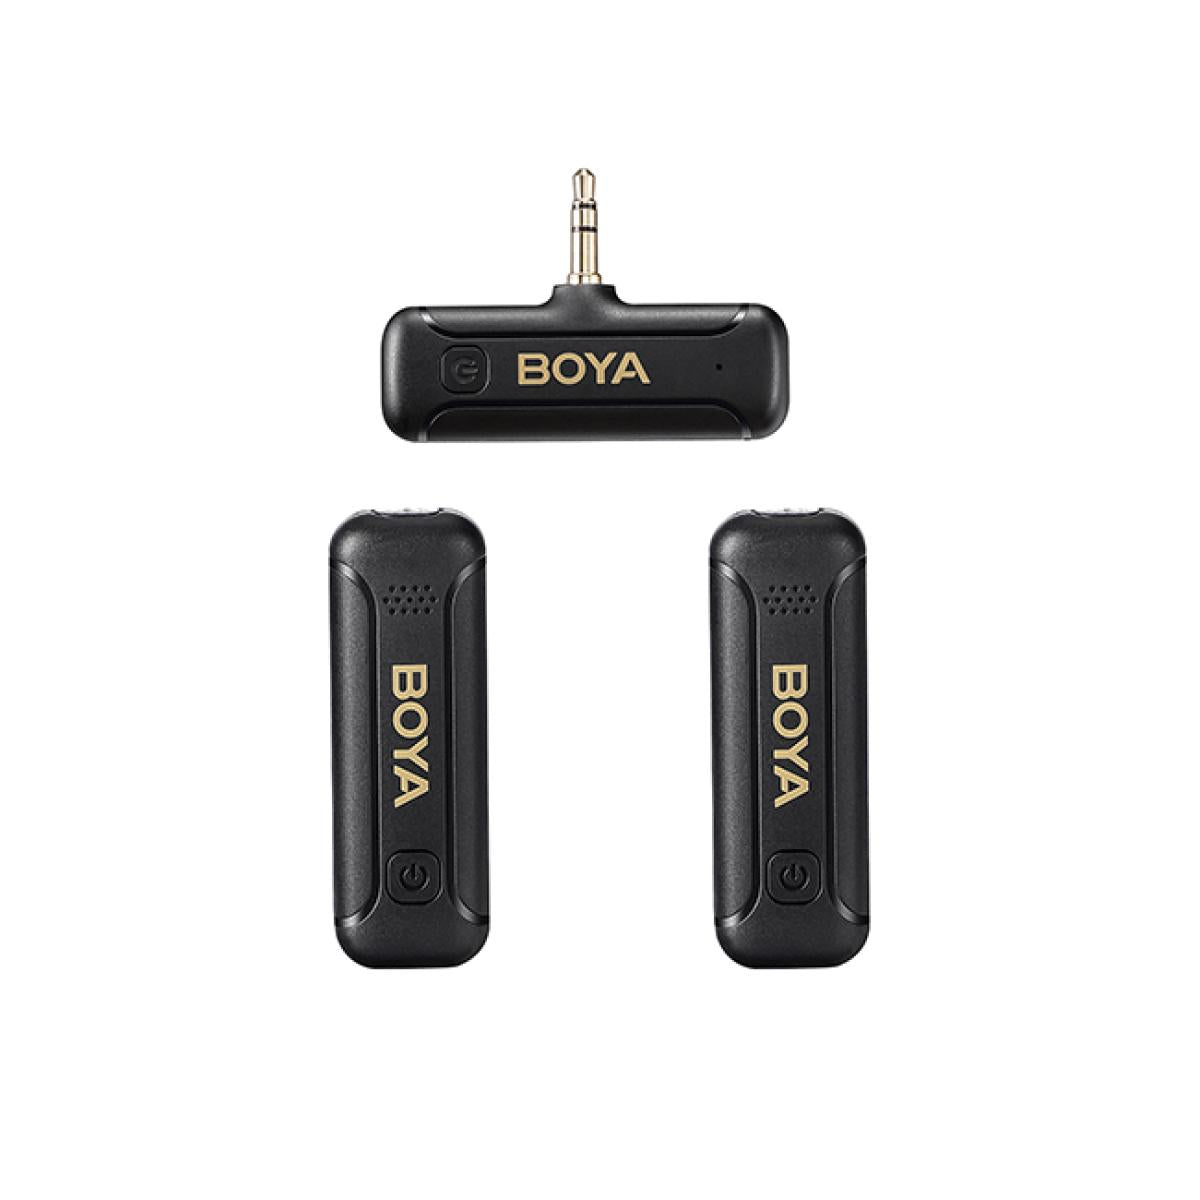 BOYA 2.4GHz AUX 3.5mm Wireless Microphone System (Two Mic) - Black